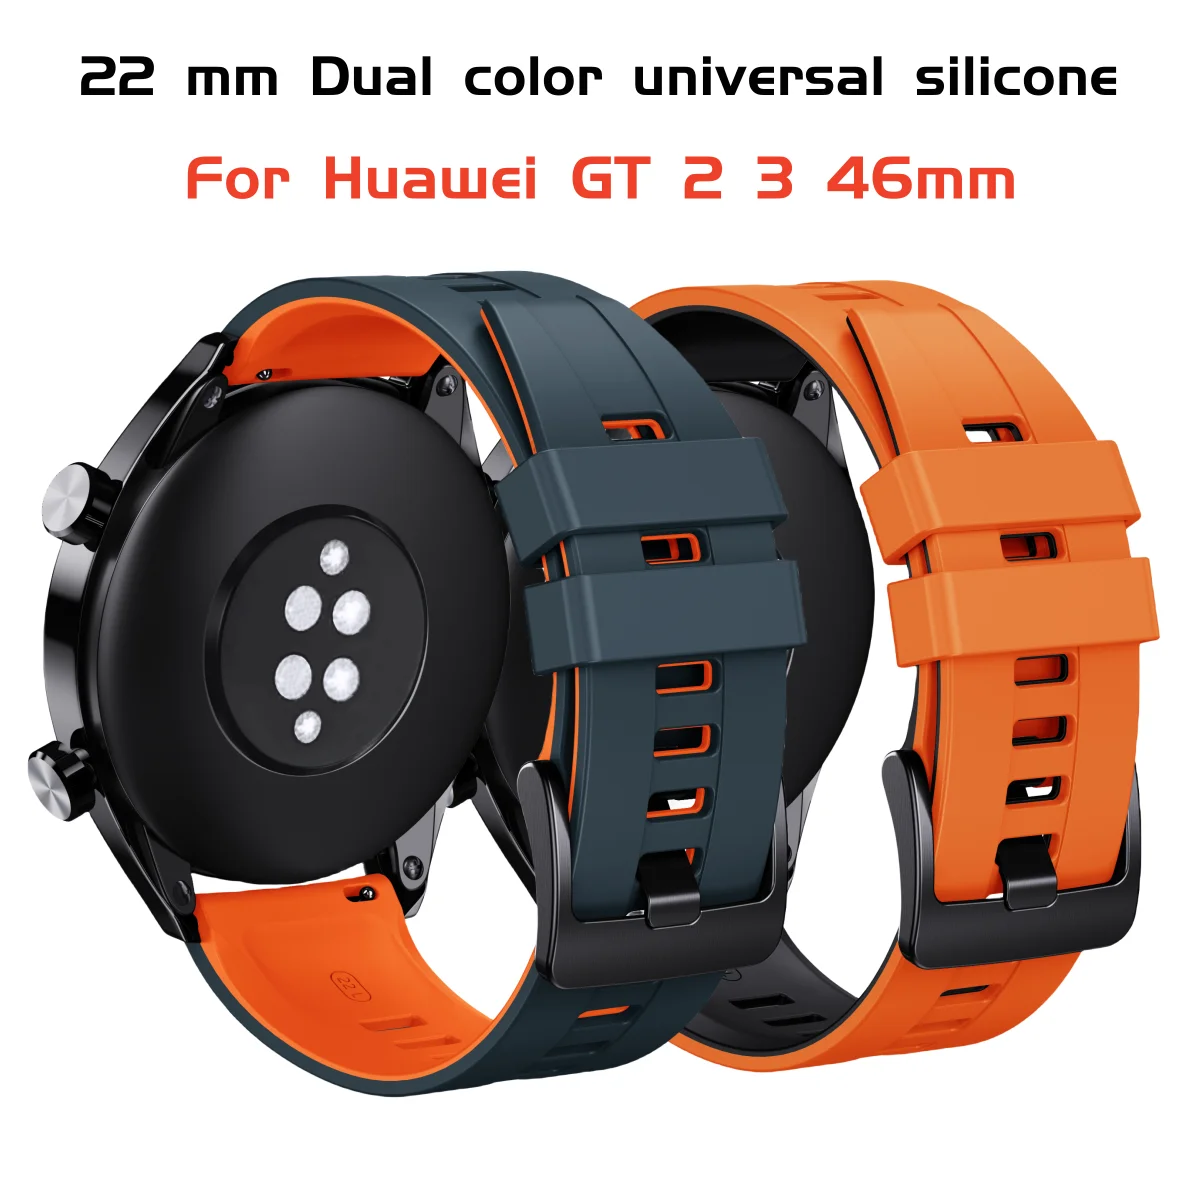 

Runcool 22mm Huawei GT 2 3 46mm Silicone Easy Watch Strap Huawei Watch3 GT2 Pro GT2e Magic2 Universal Wrist Strap